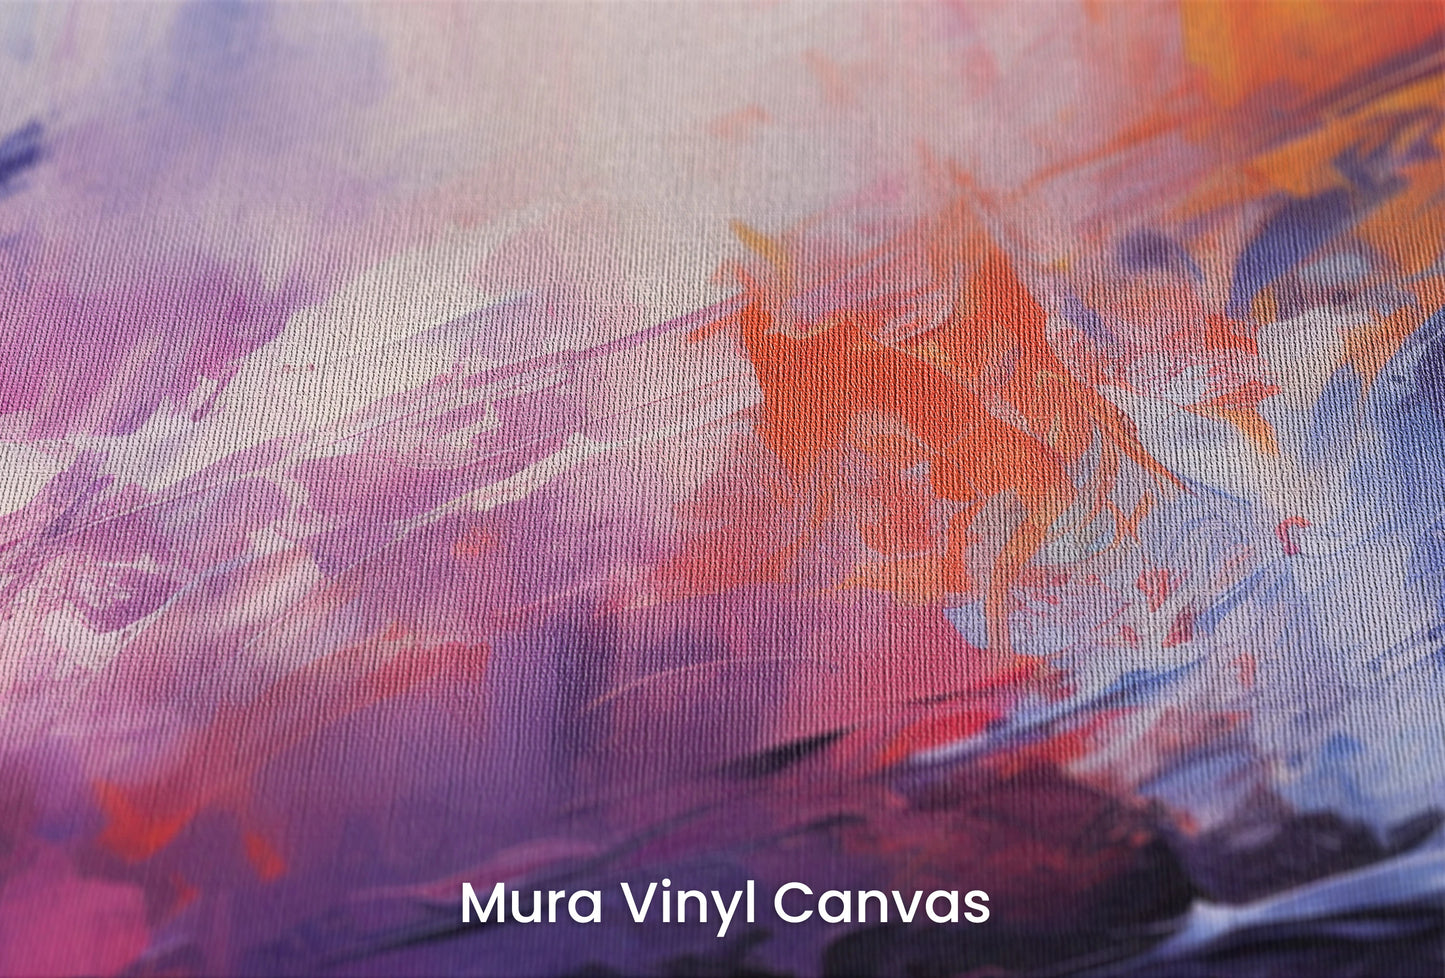 Zbliżenie na artystyczną fototapetę o nazwie Vivid Dreamscape na podłożu Mura Vinyl Canvas - faktura naturalnego płótna.